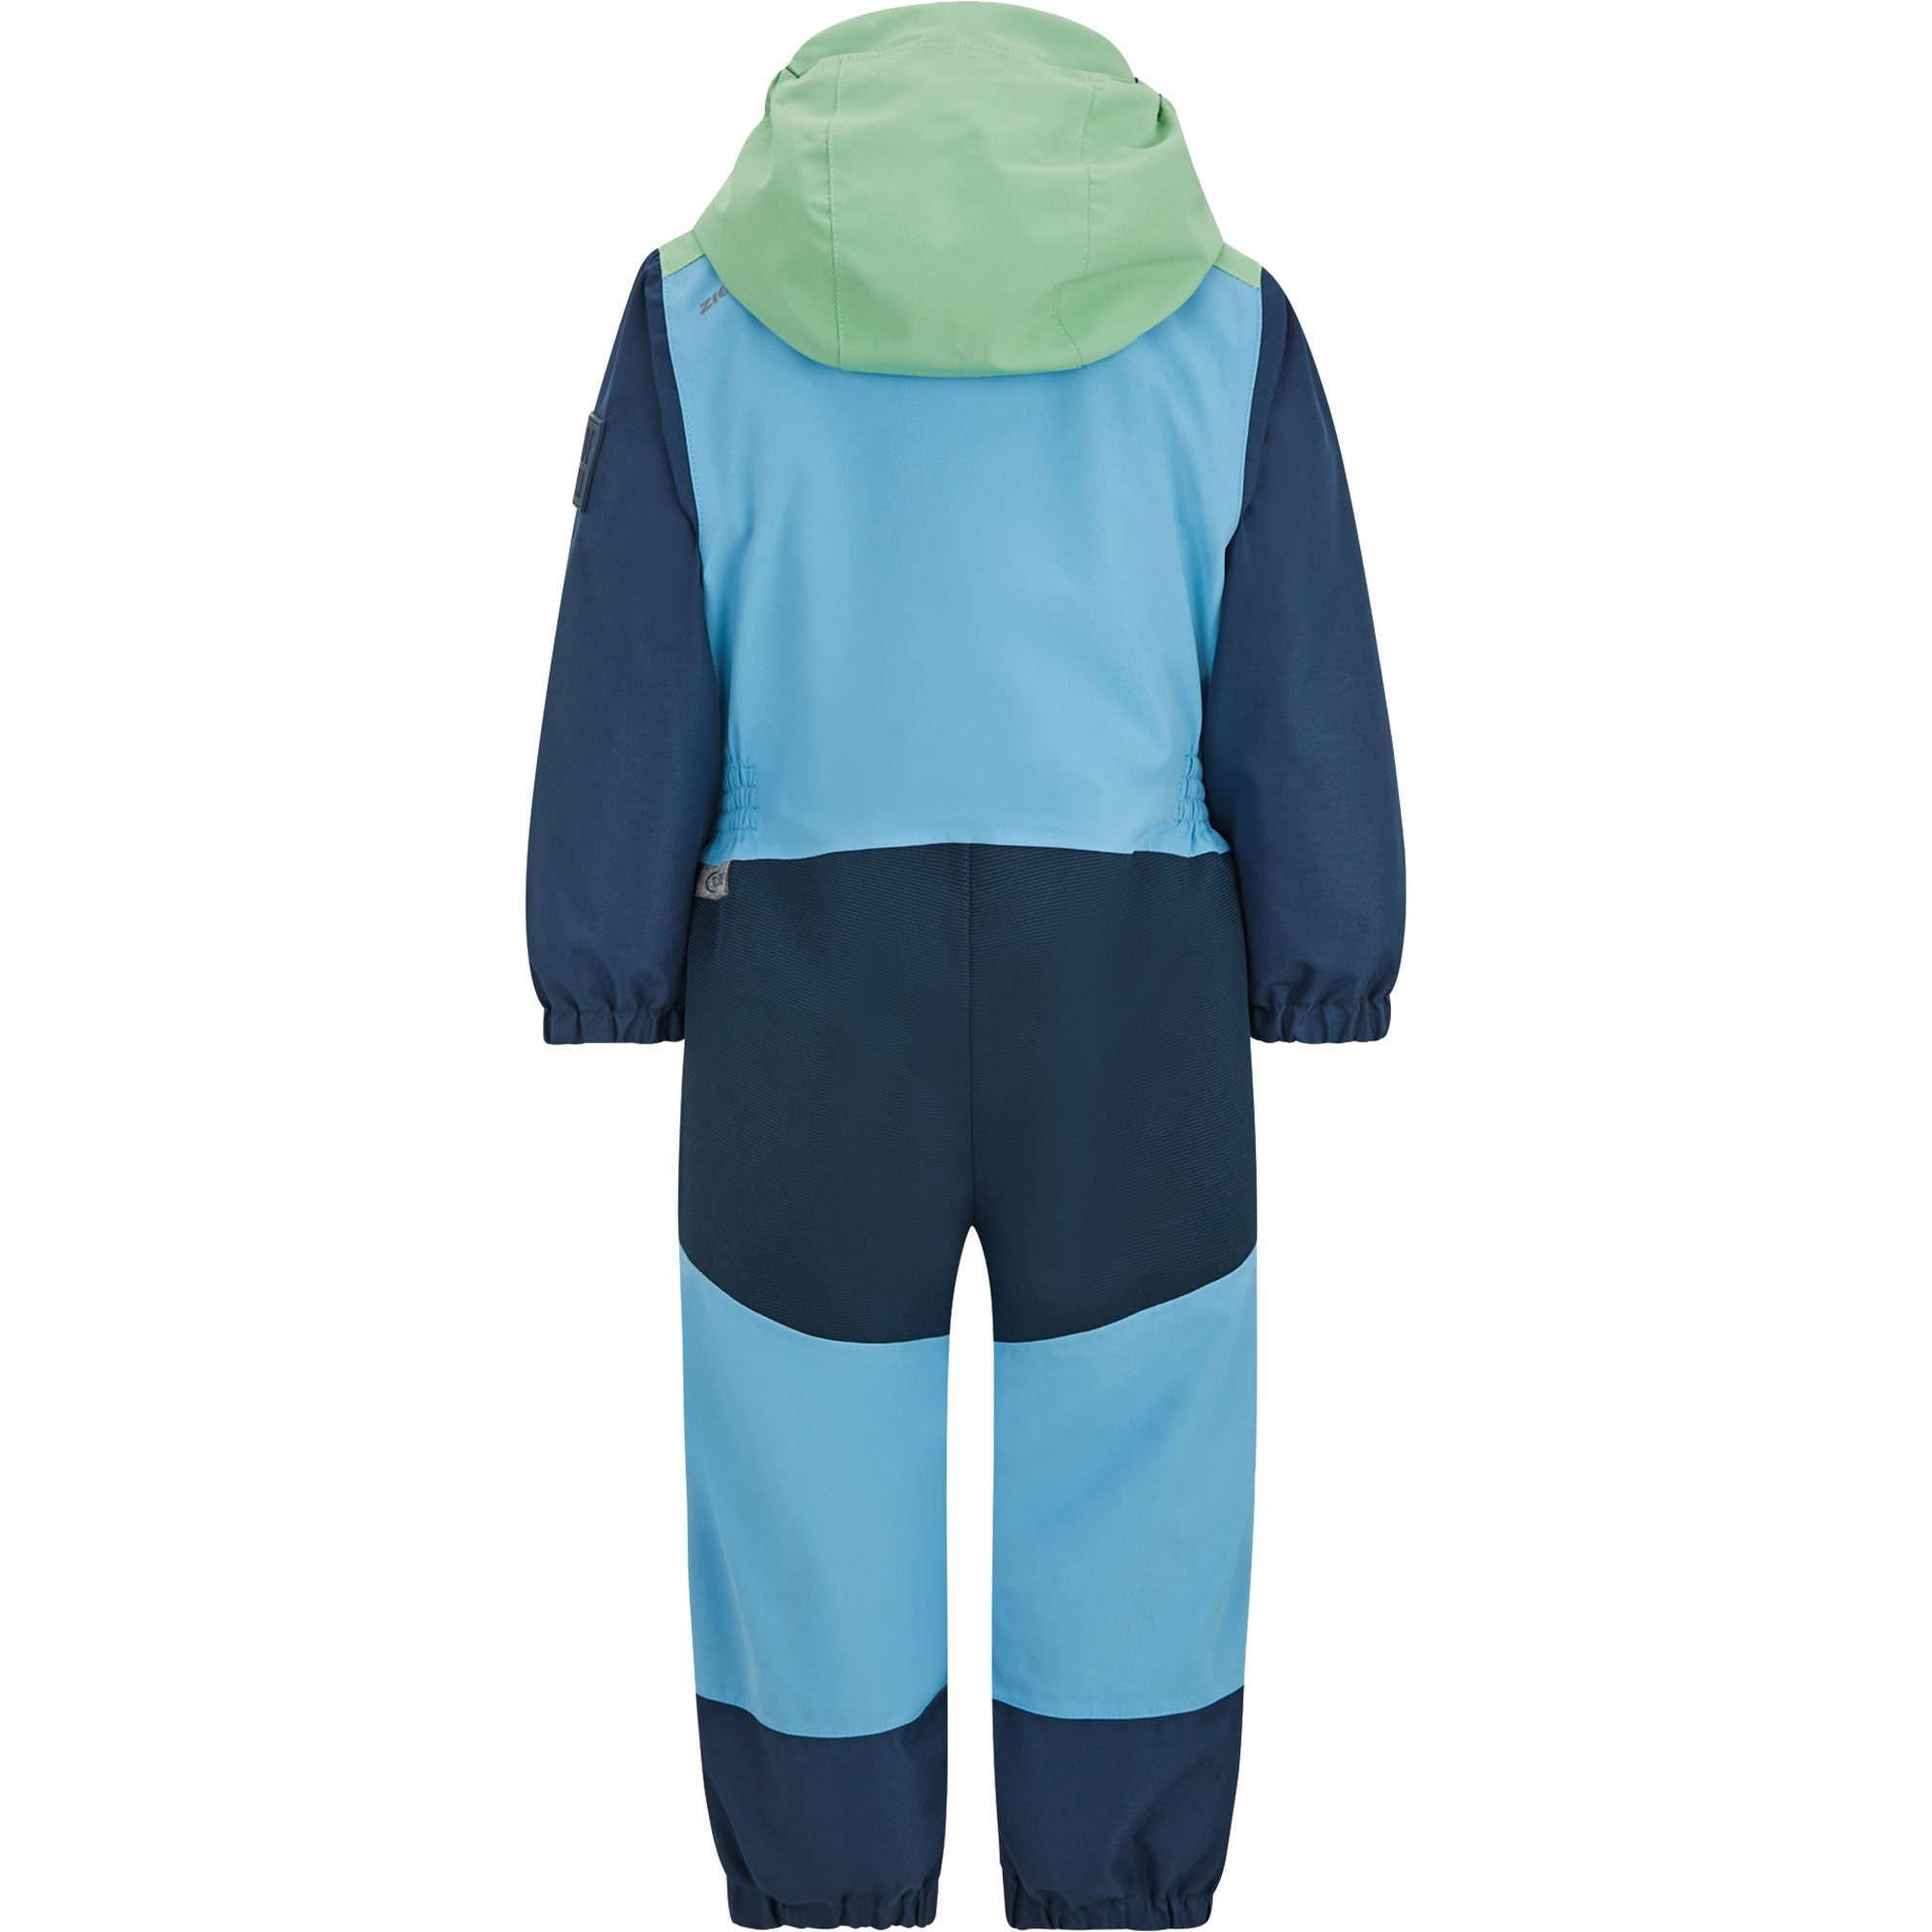 morning Snowsuit Shop Ziener - Bittl Sport Mini blue at Kids Anup